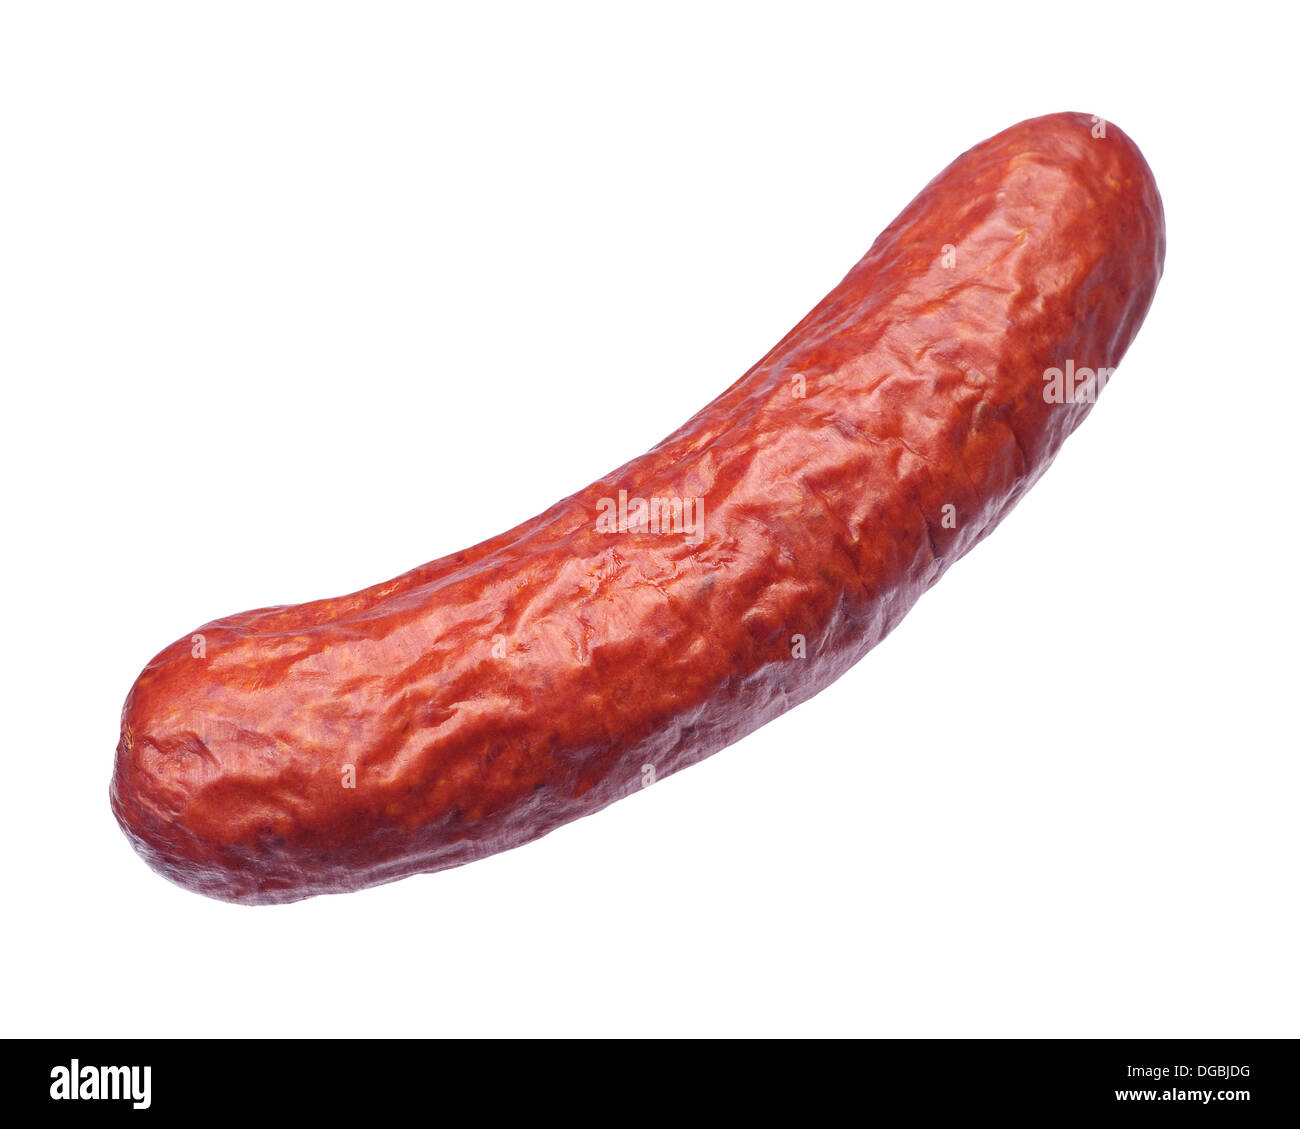 Homemade smoked sausage isolated on white background Stock Photo